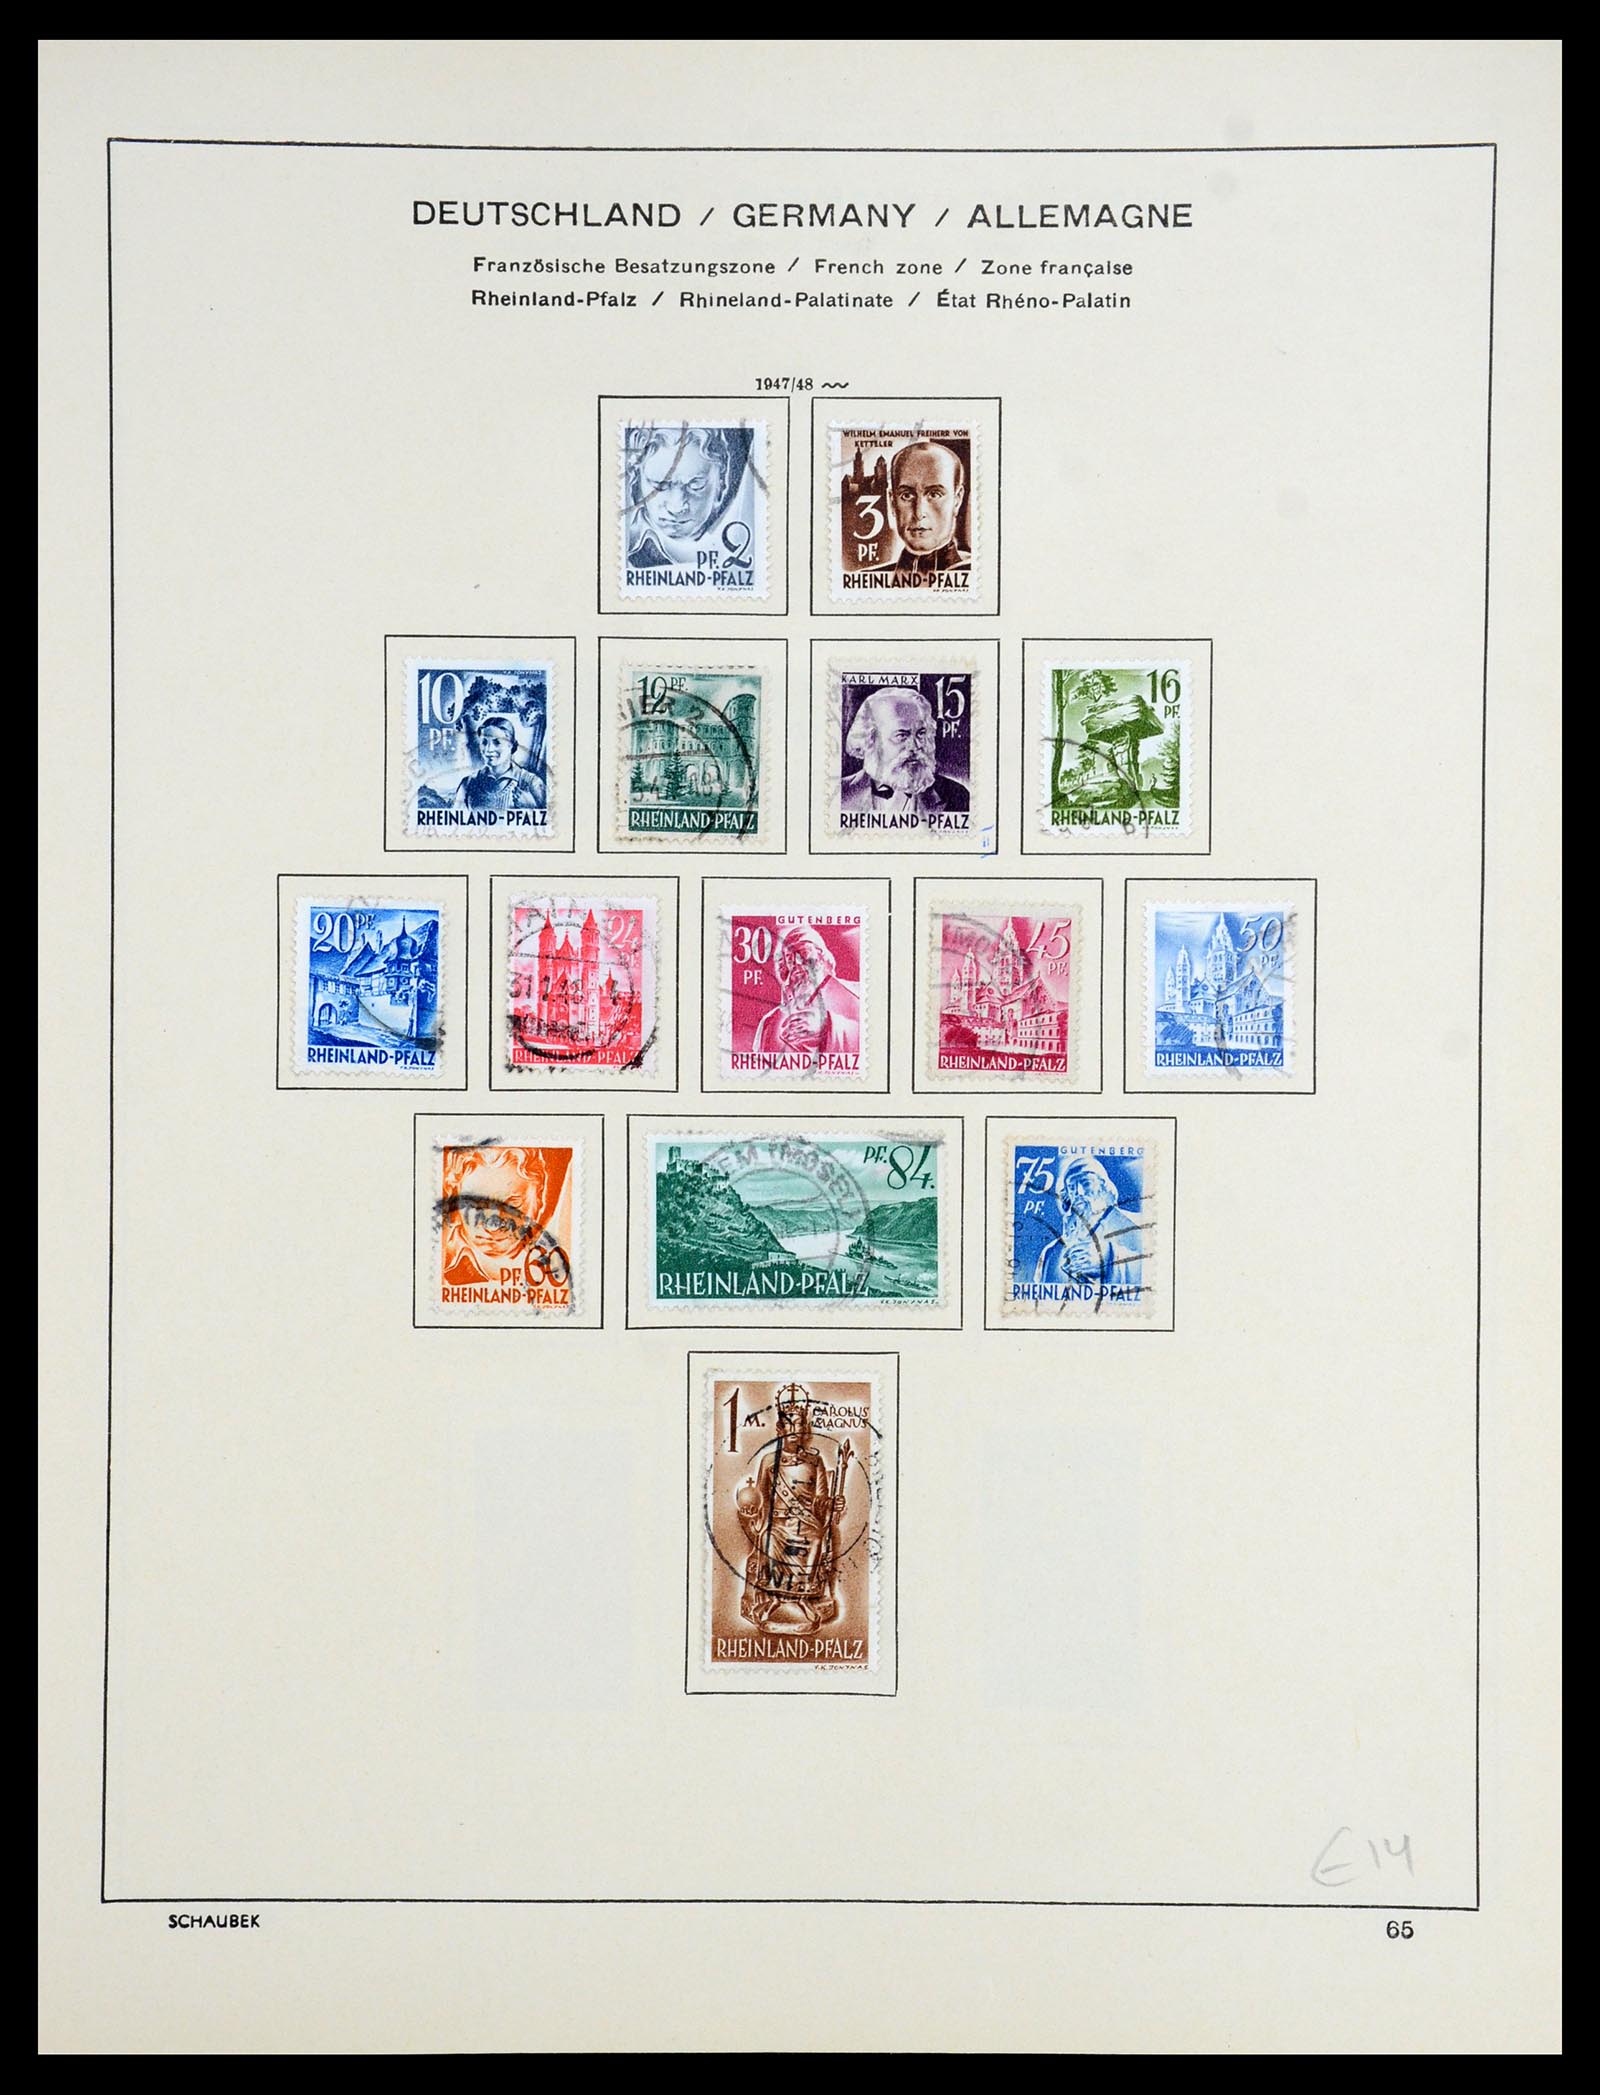 35962 020 - Stamp collection 35962 German Zones 1945-1949.